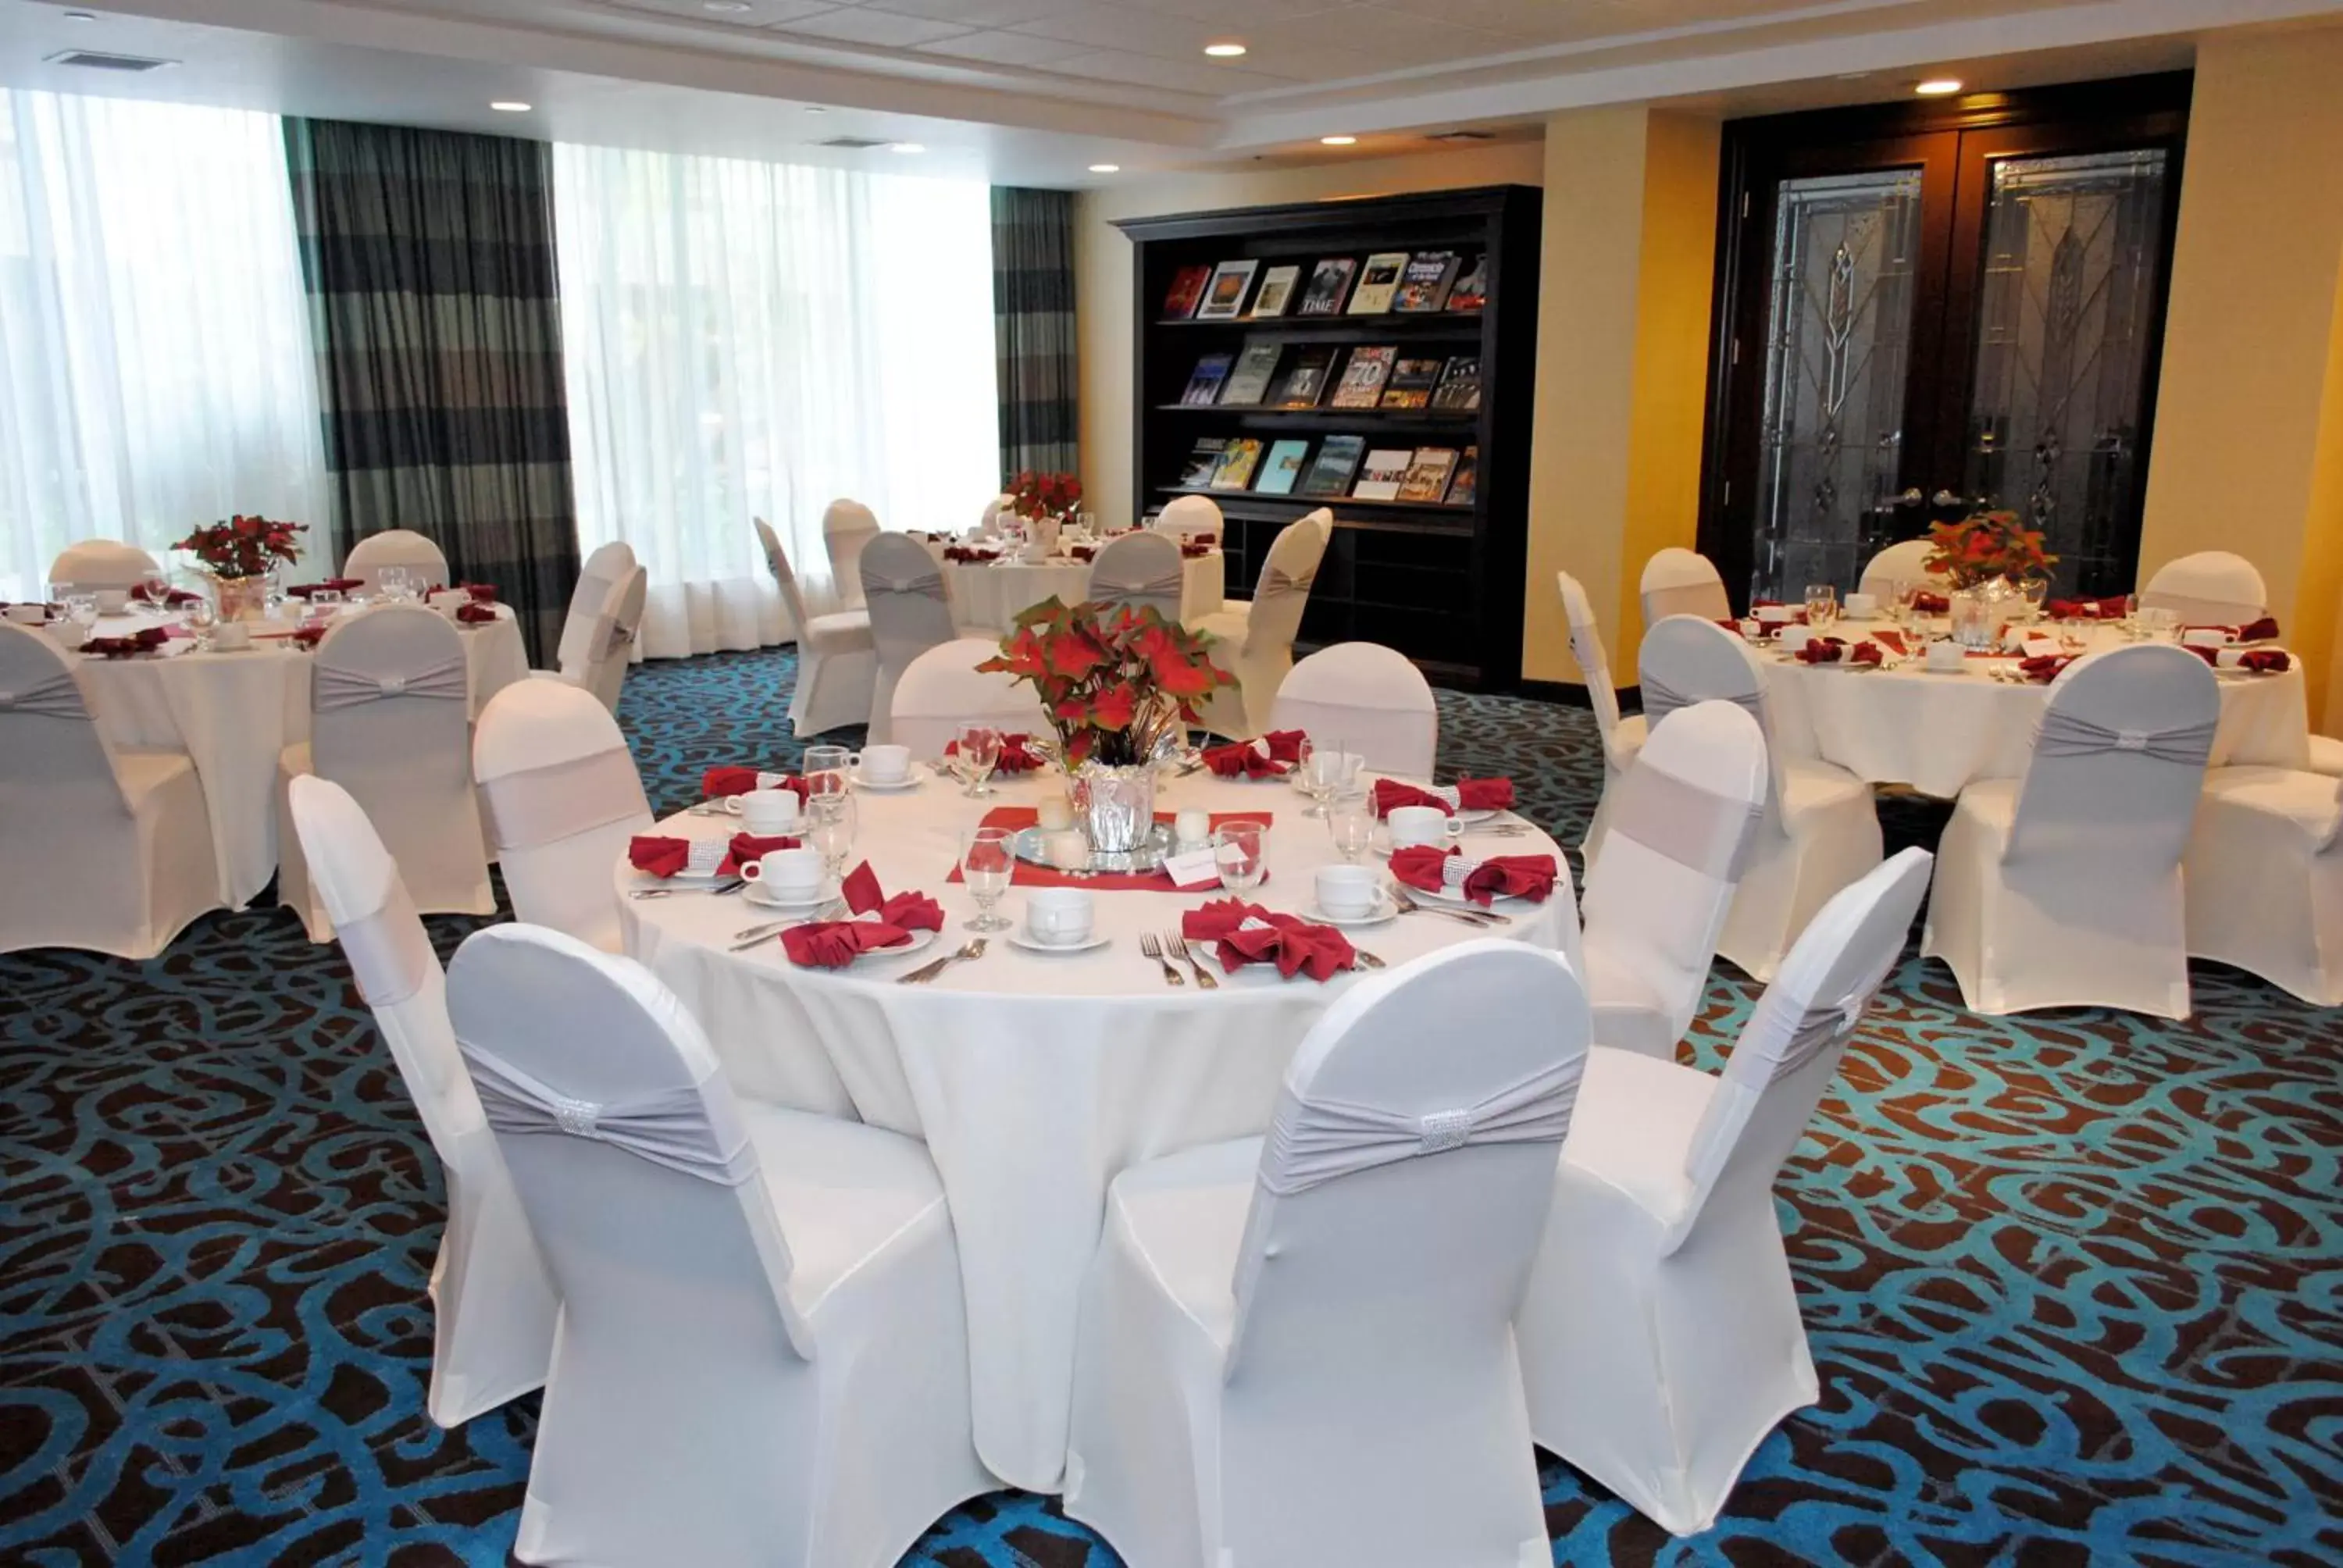 Banquet/Function facilities, Banquet Facilities in Radisson Hotel Chatsworth